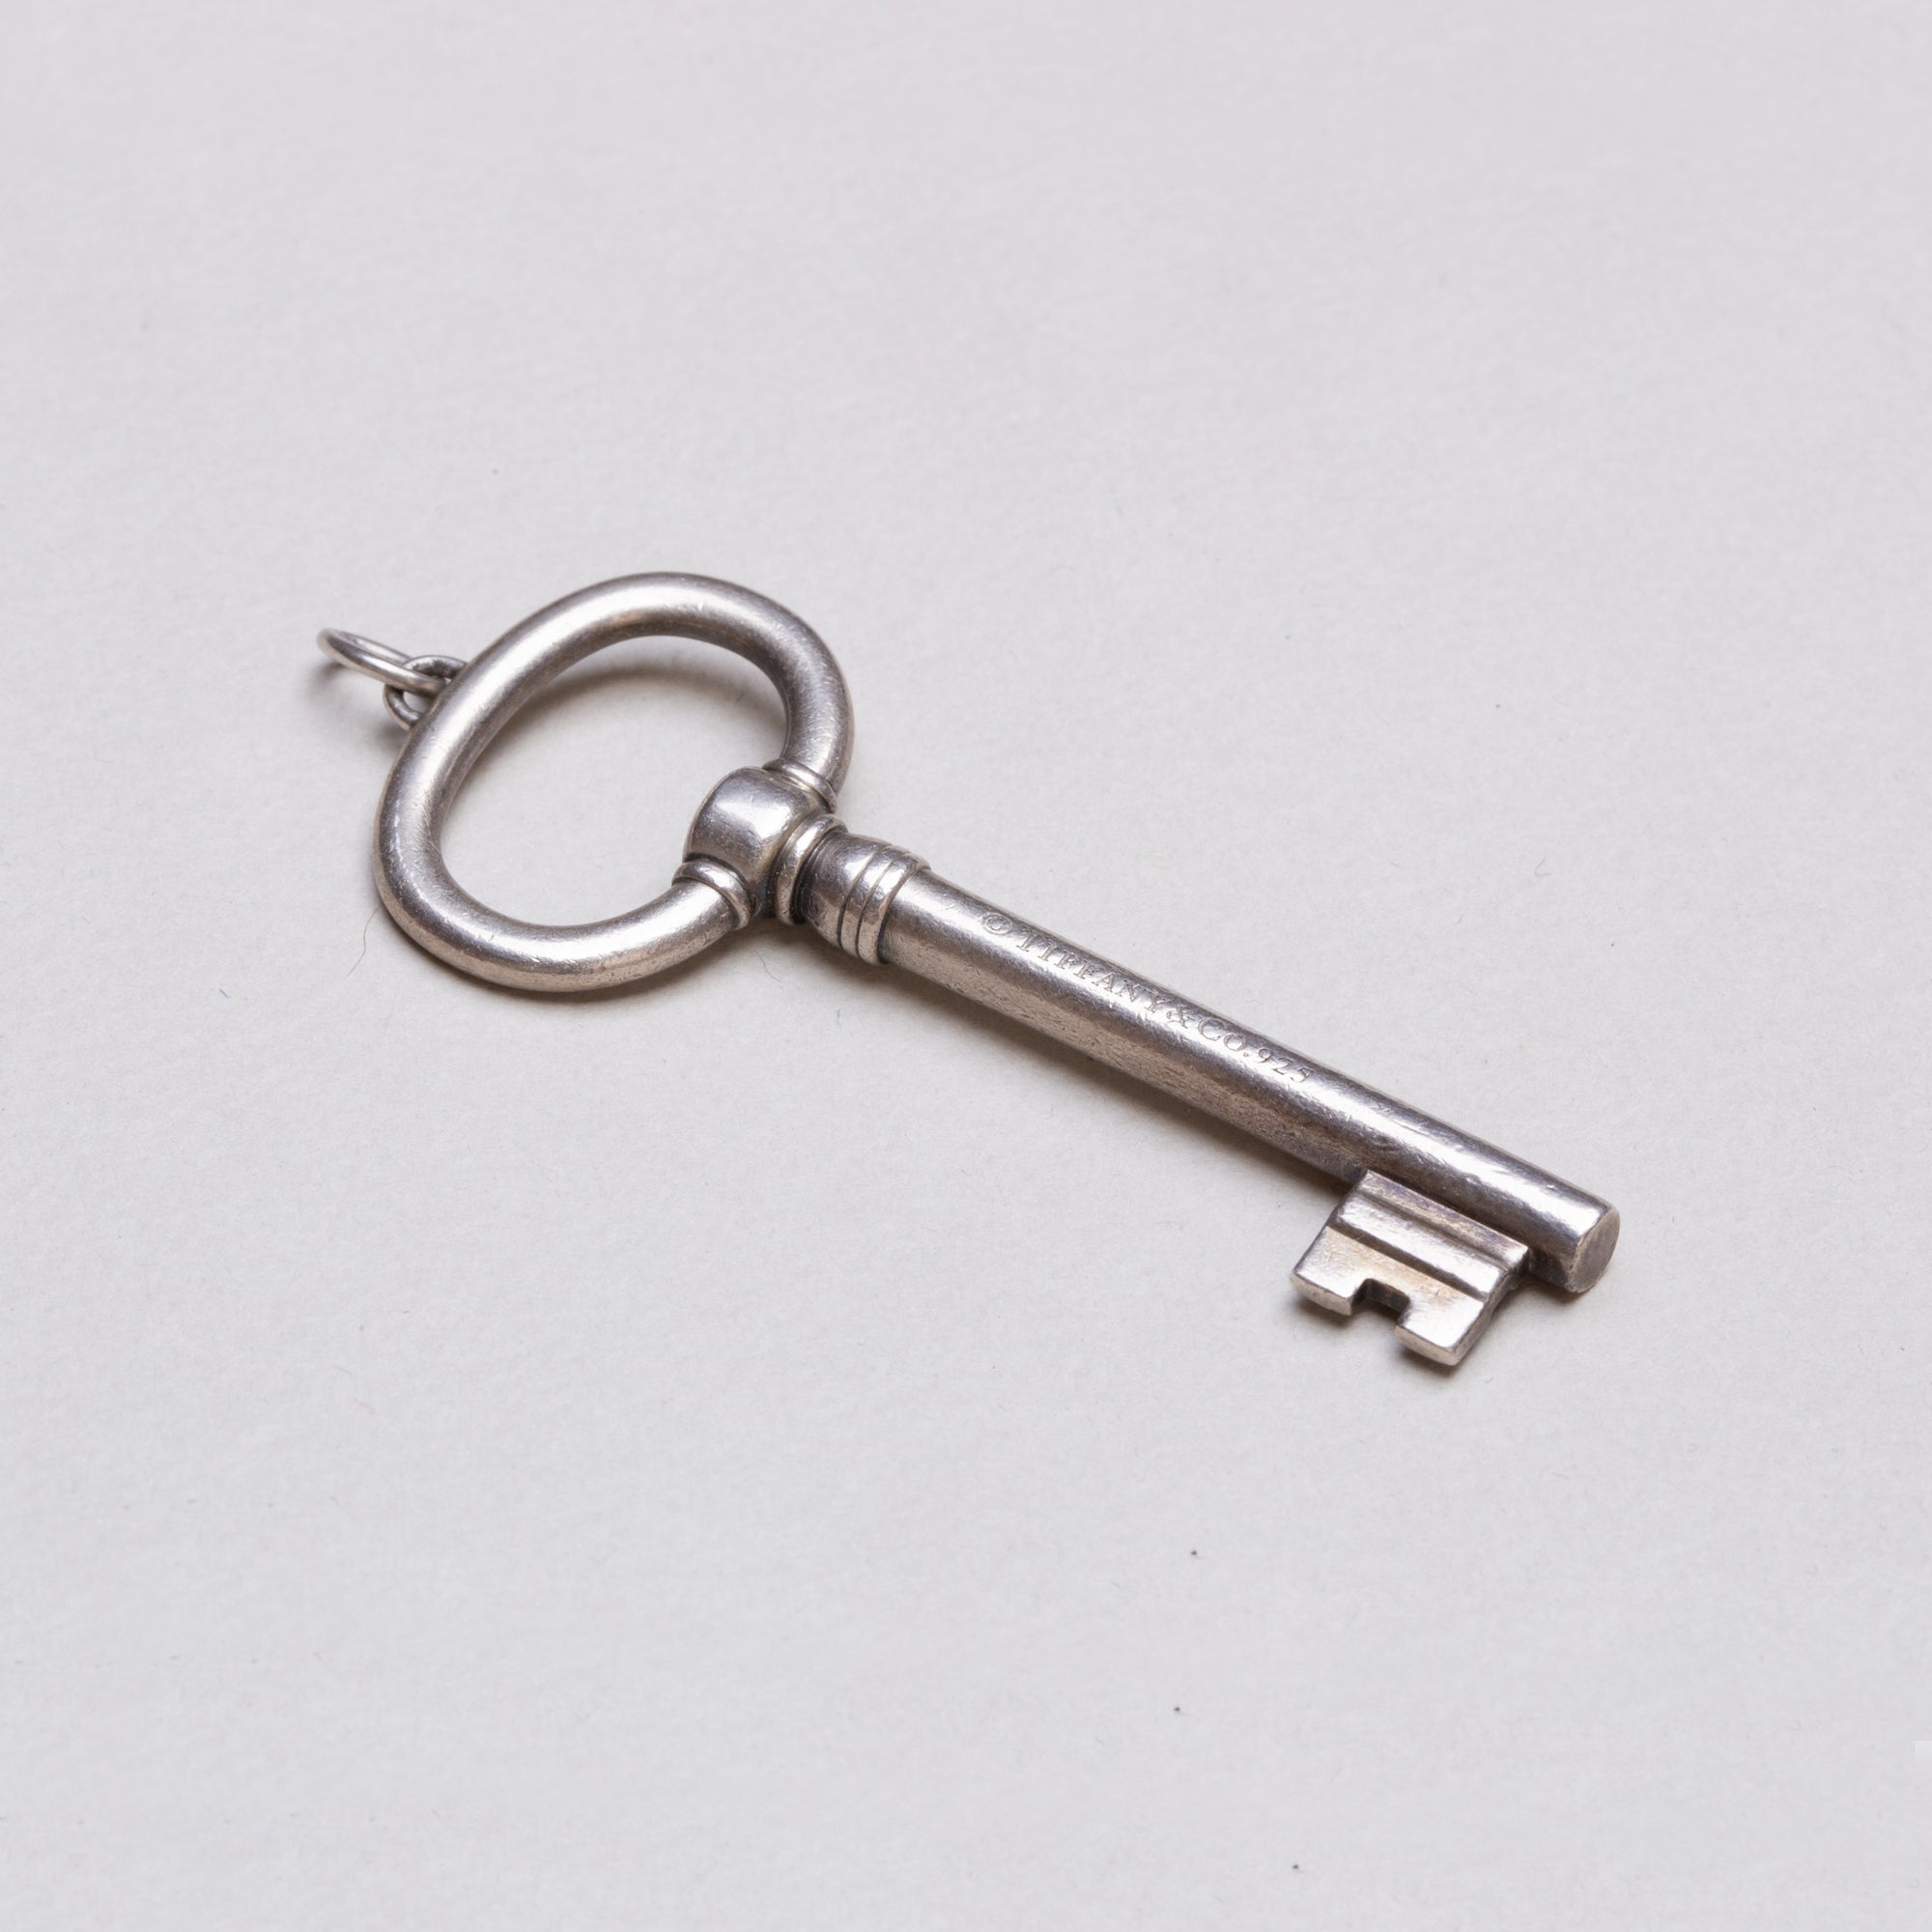 Vintage Tiffany Sterling Silver Key Pendant Charm